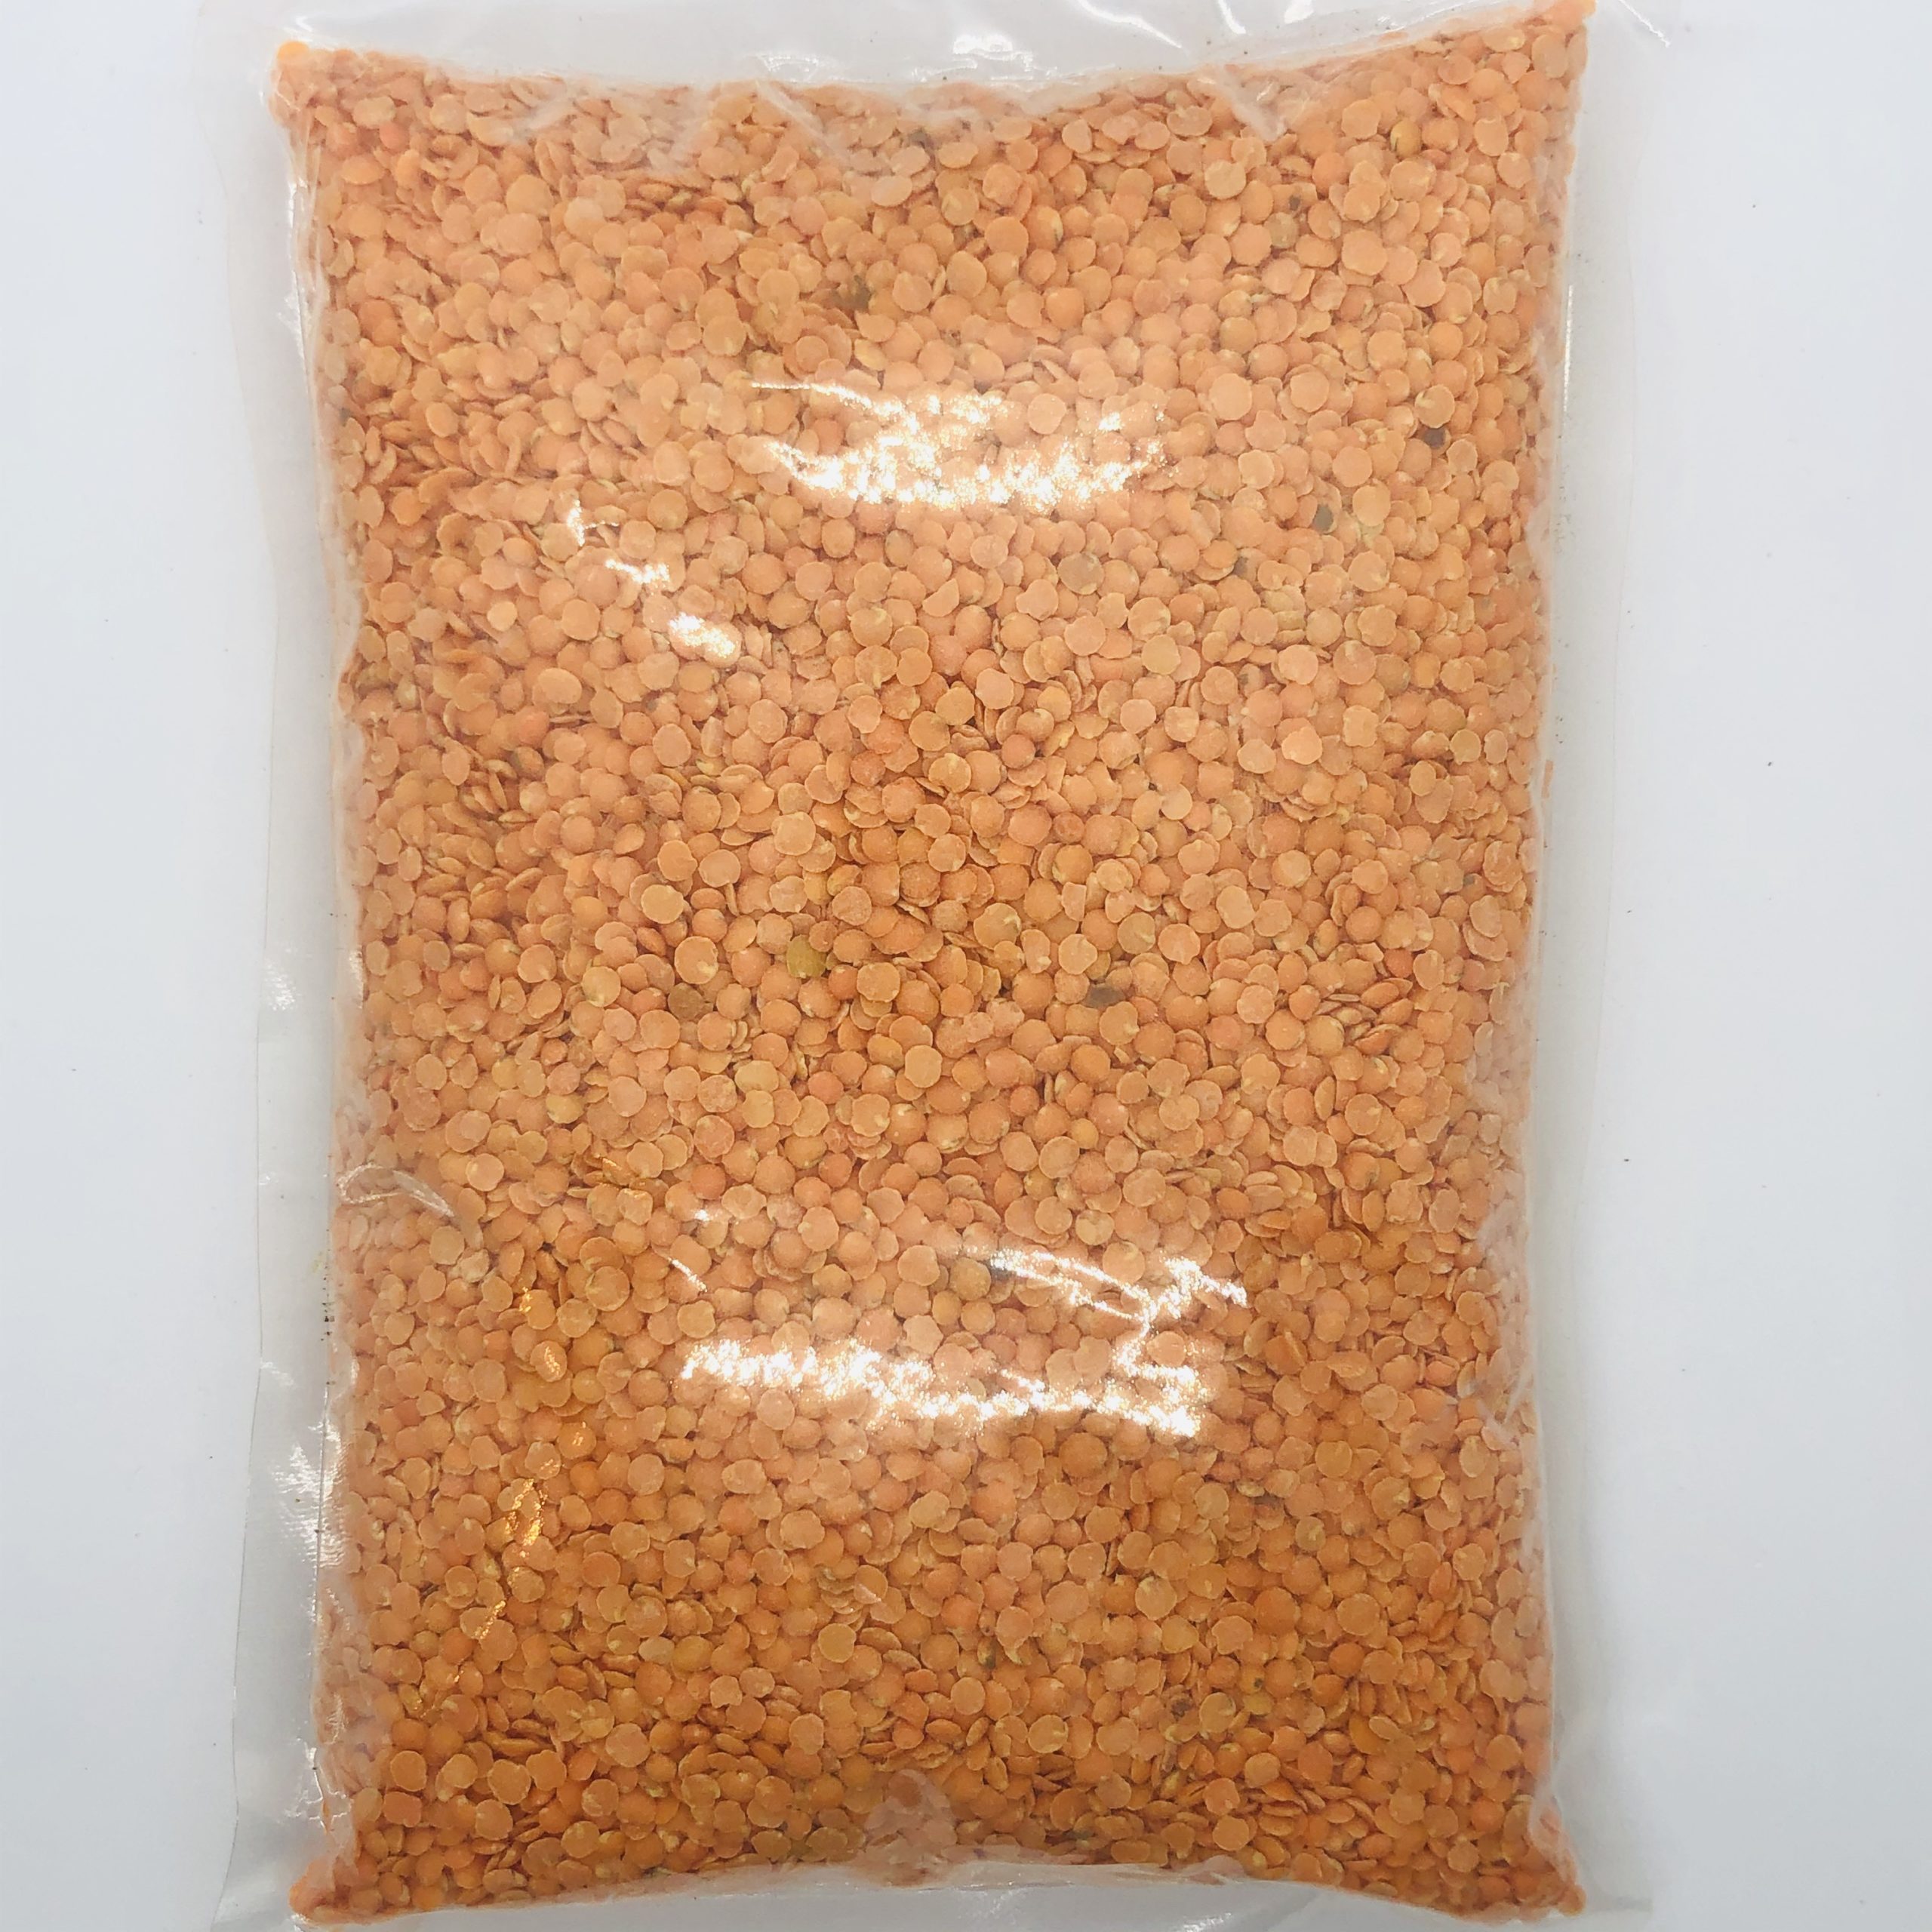 Red Lentils (Mysore Dhal) 2 lb